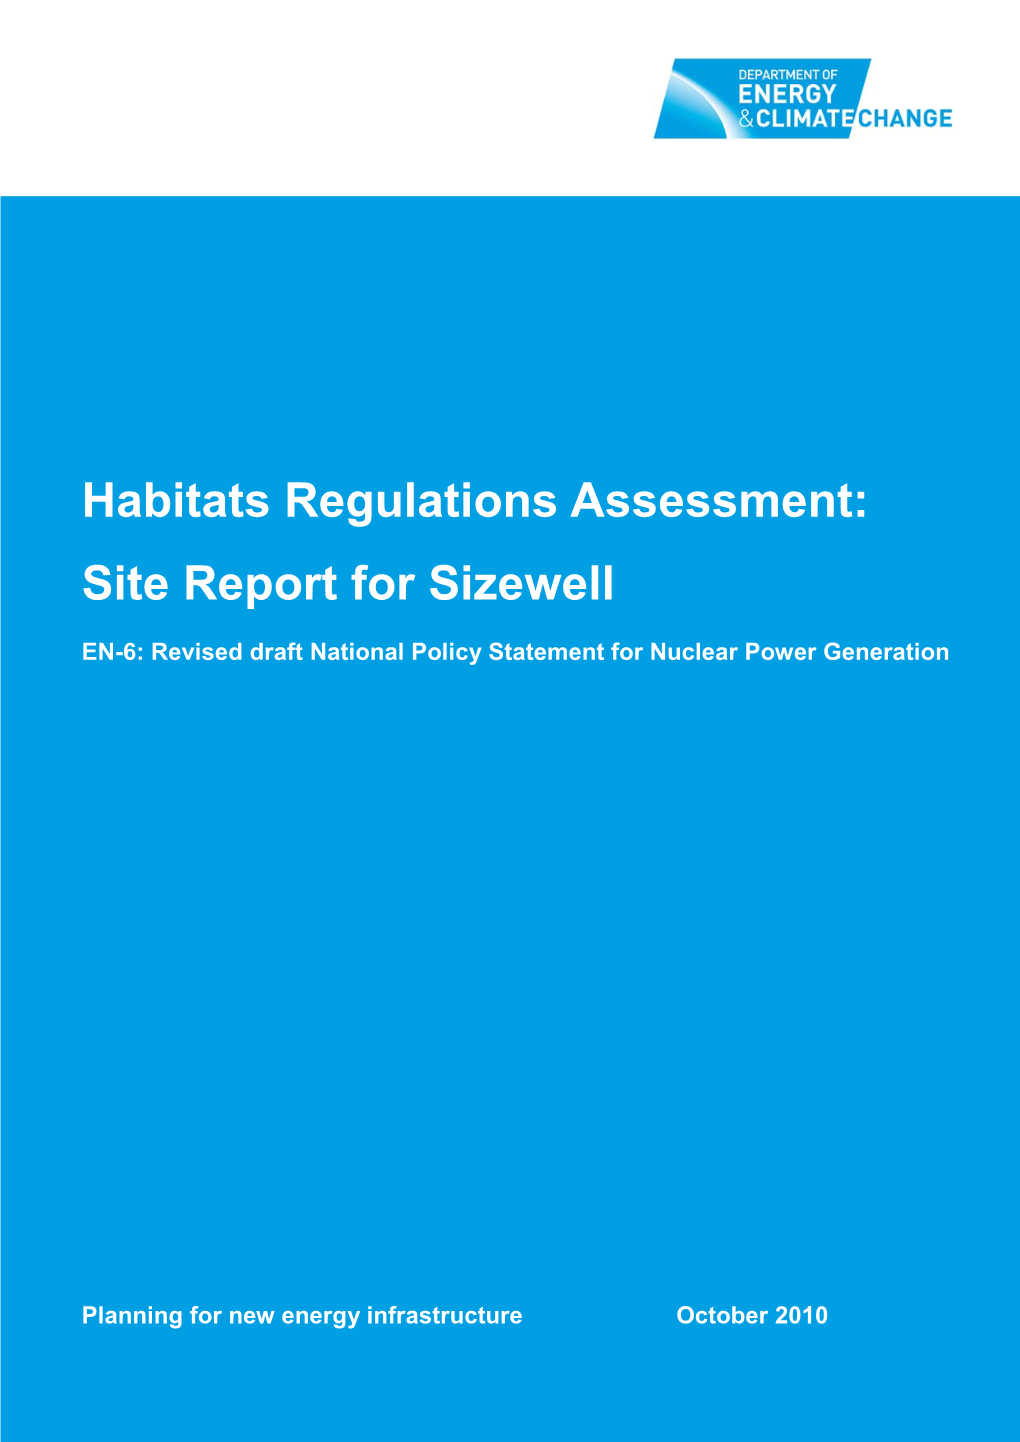 Habitats Regulations Assessment Site Report for Sizewell